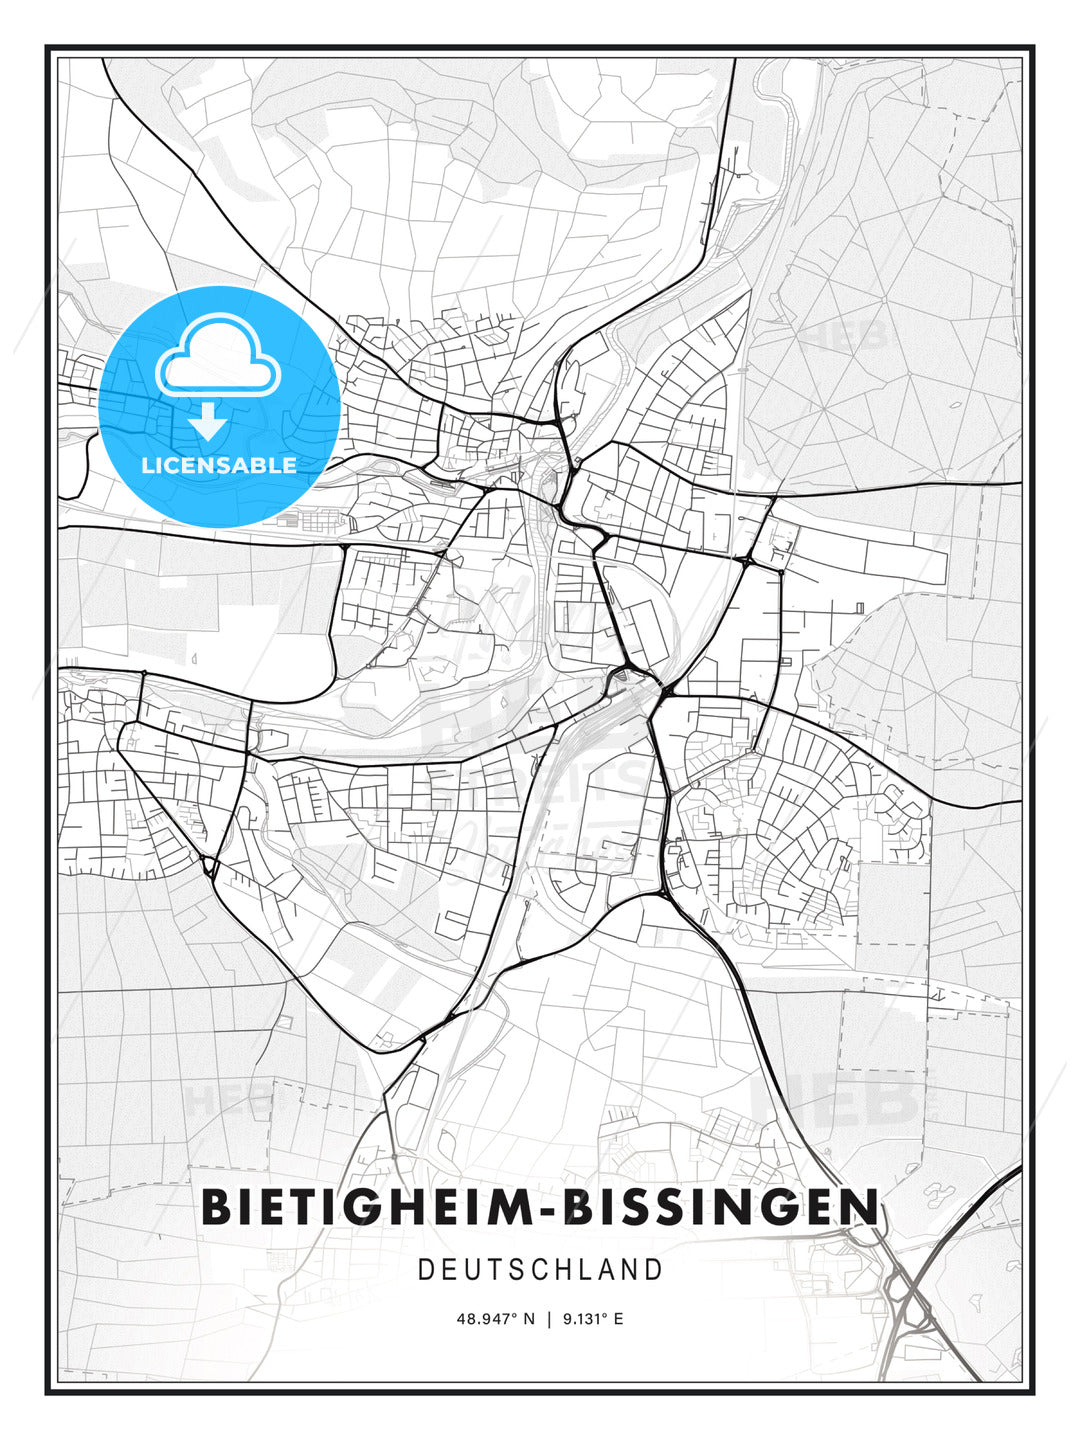 Bietigheim-Bissingen, Germany, Modern Print Template in Various Formats - HEBSTREITS Sketches